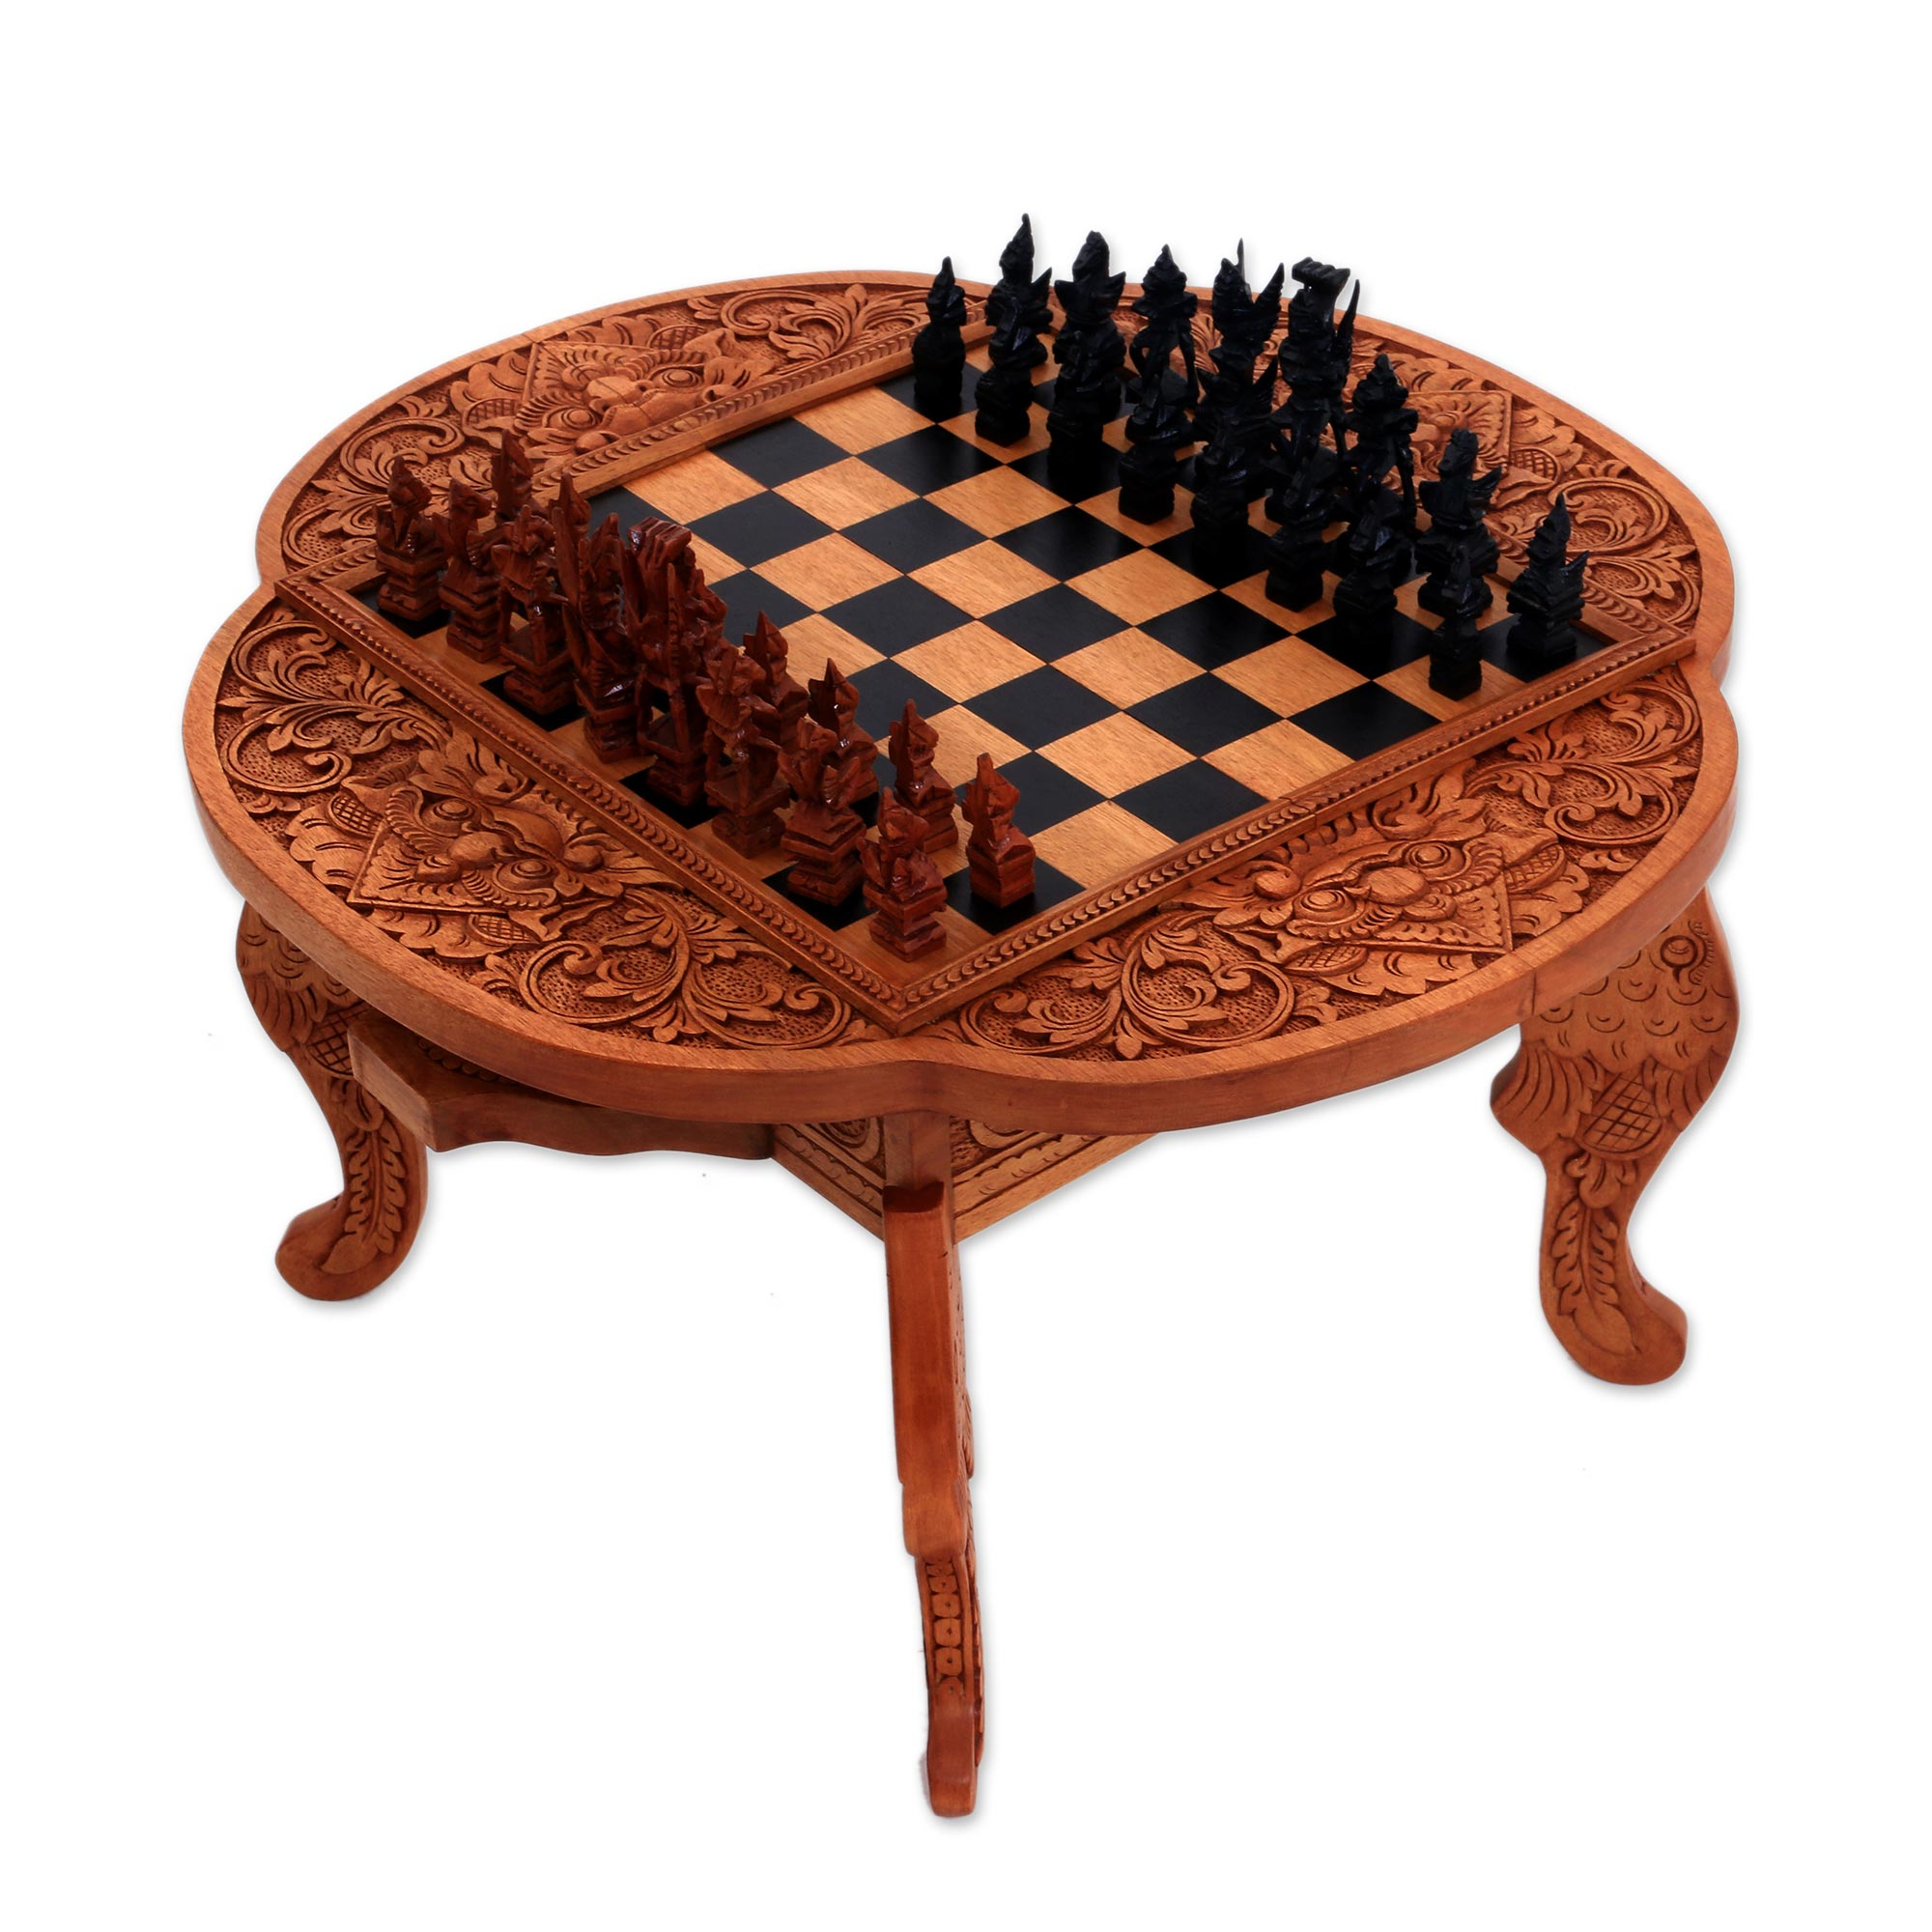 Novica 2 Player Wood Chess